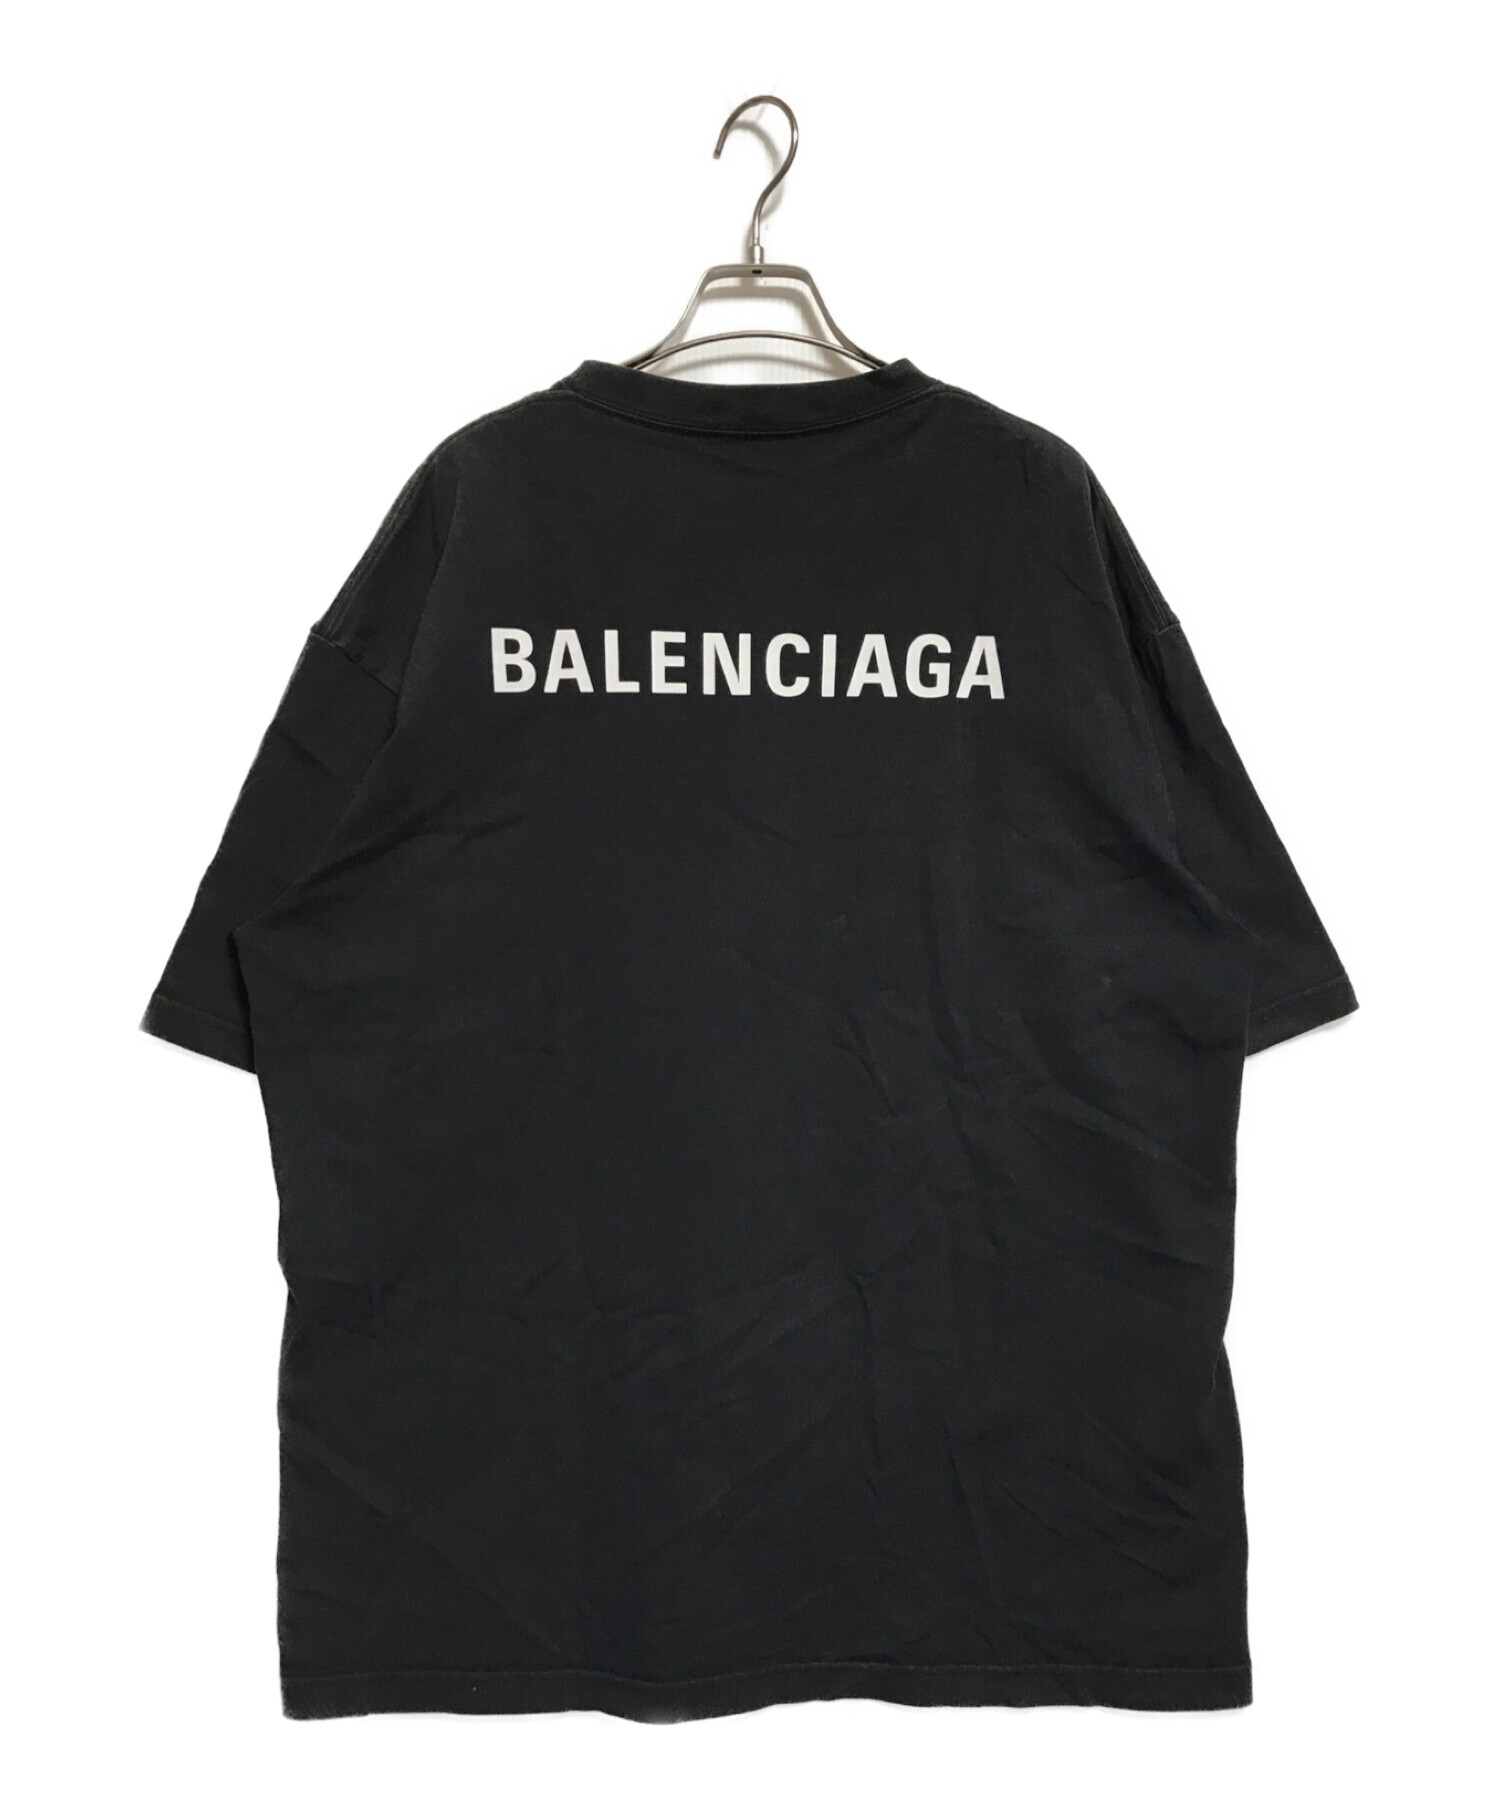 BALENCIAGA (バレンシアガ) ロゴプリントTシャツ ブラック サイズ:S